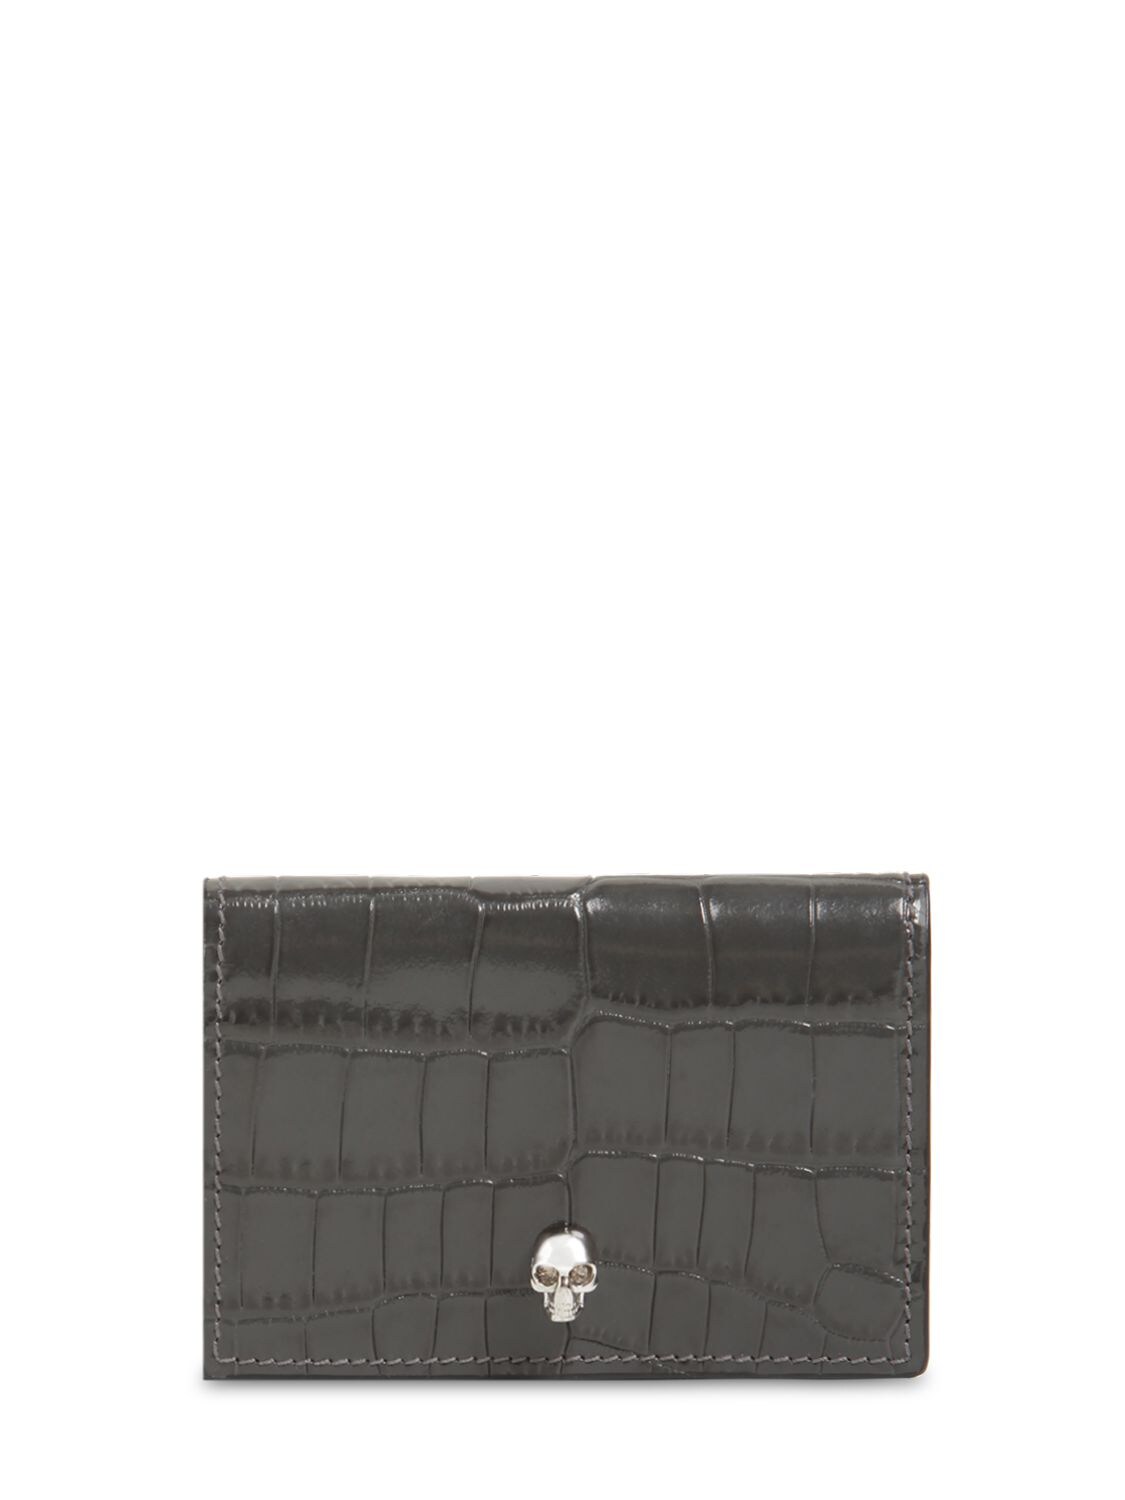 Alexander Mcqueen Croc Embossed Leather Card Holder In Graphite Grey